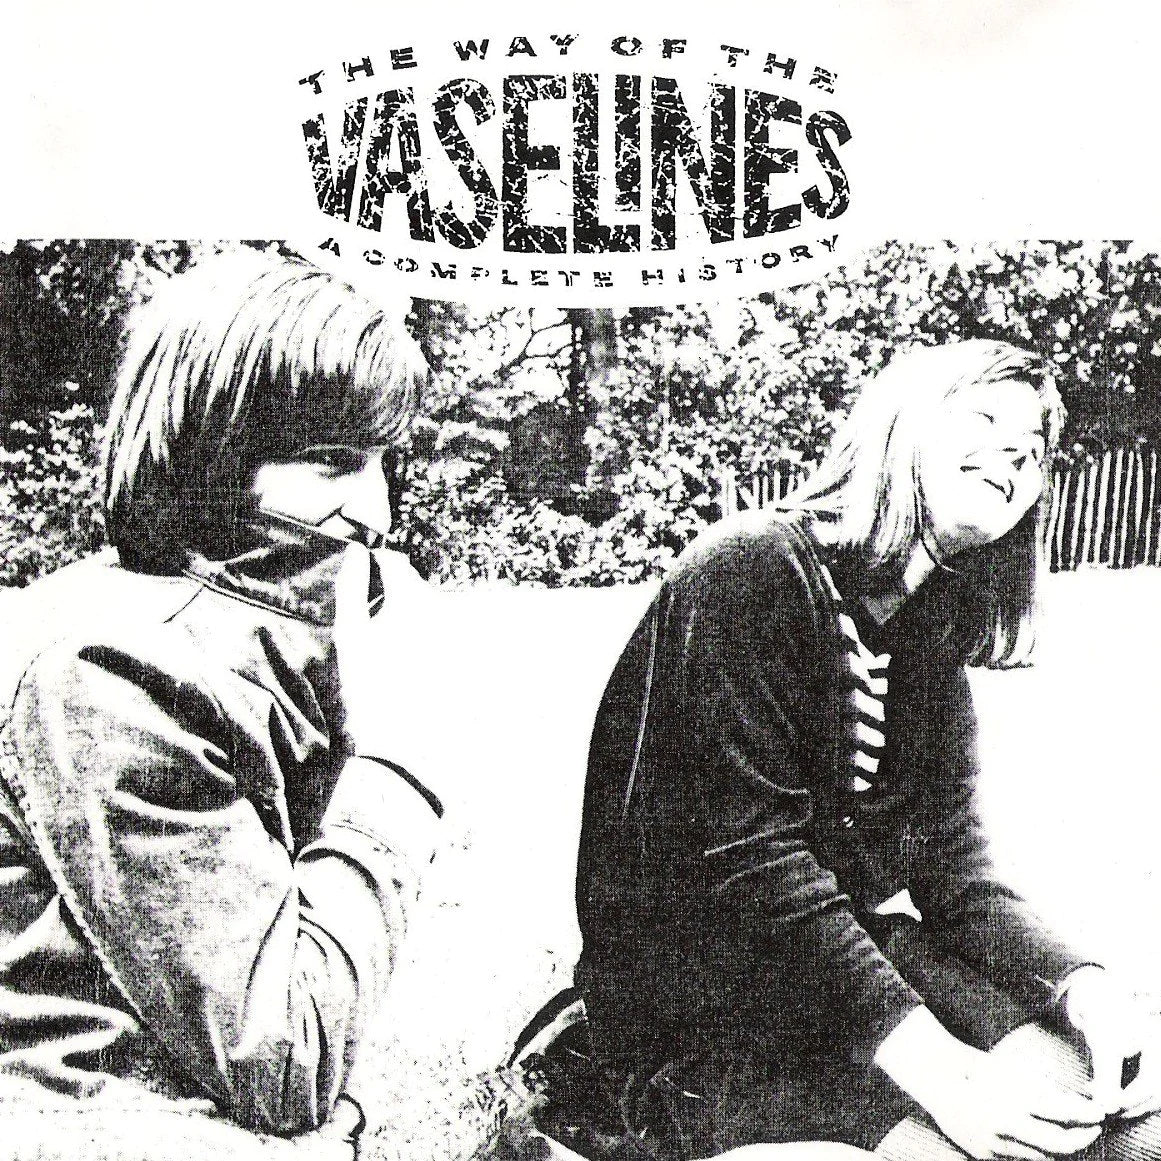 THE VASELINES - THE WAY OF THE VASELINES Vinyl 2xLP